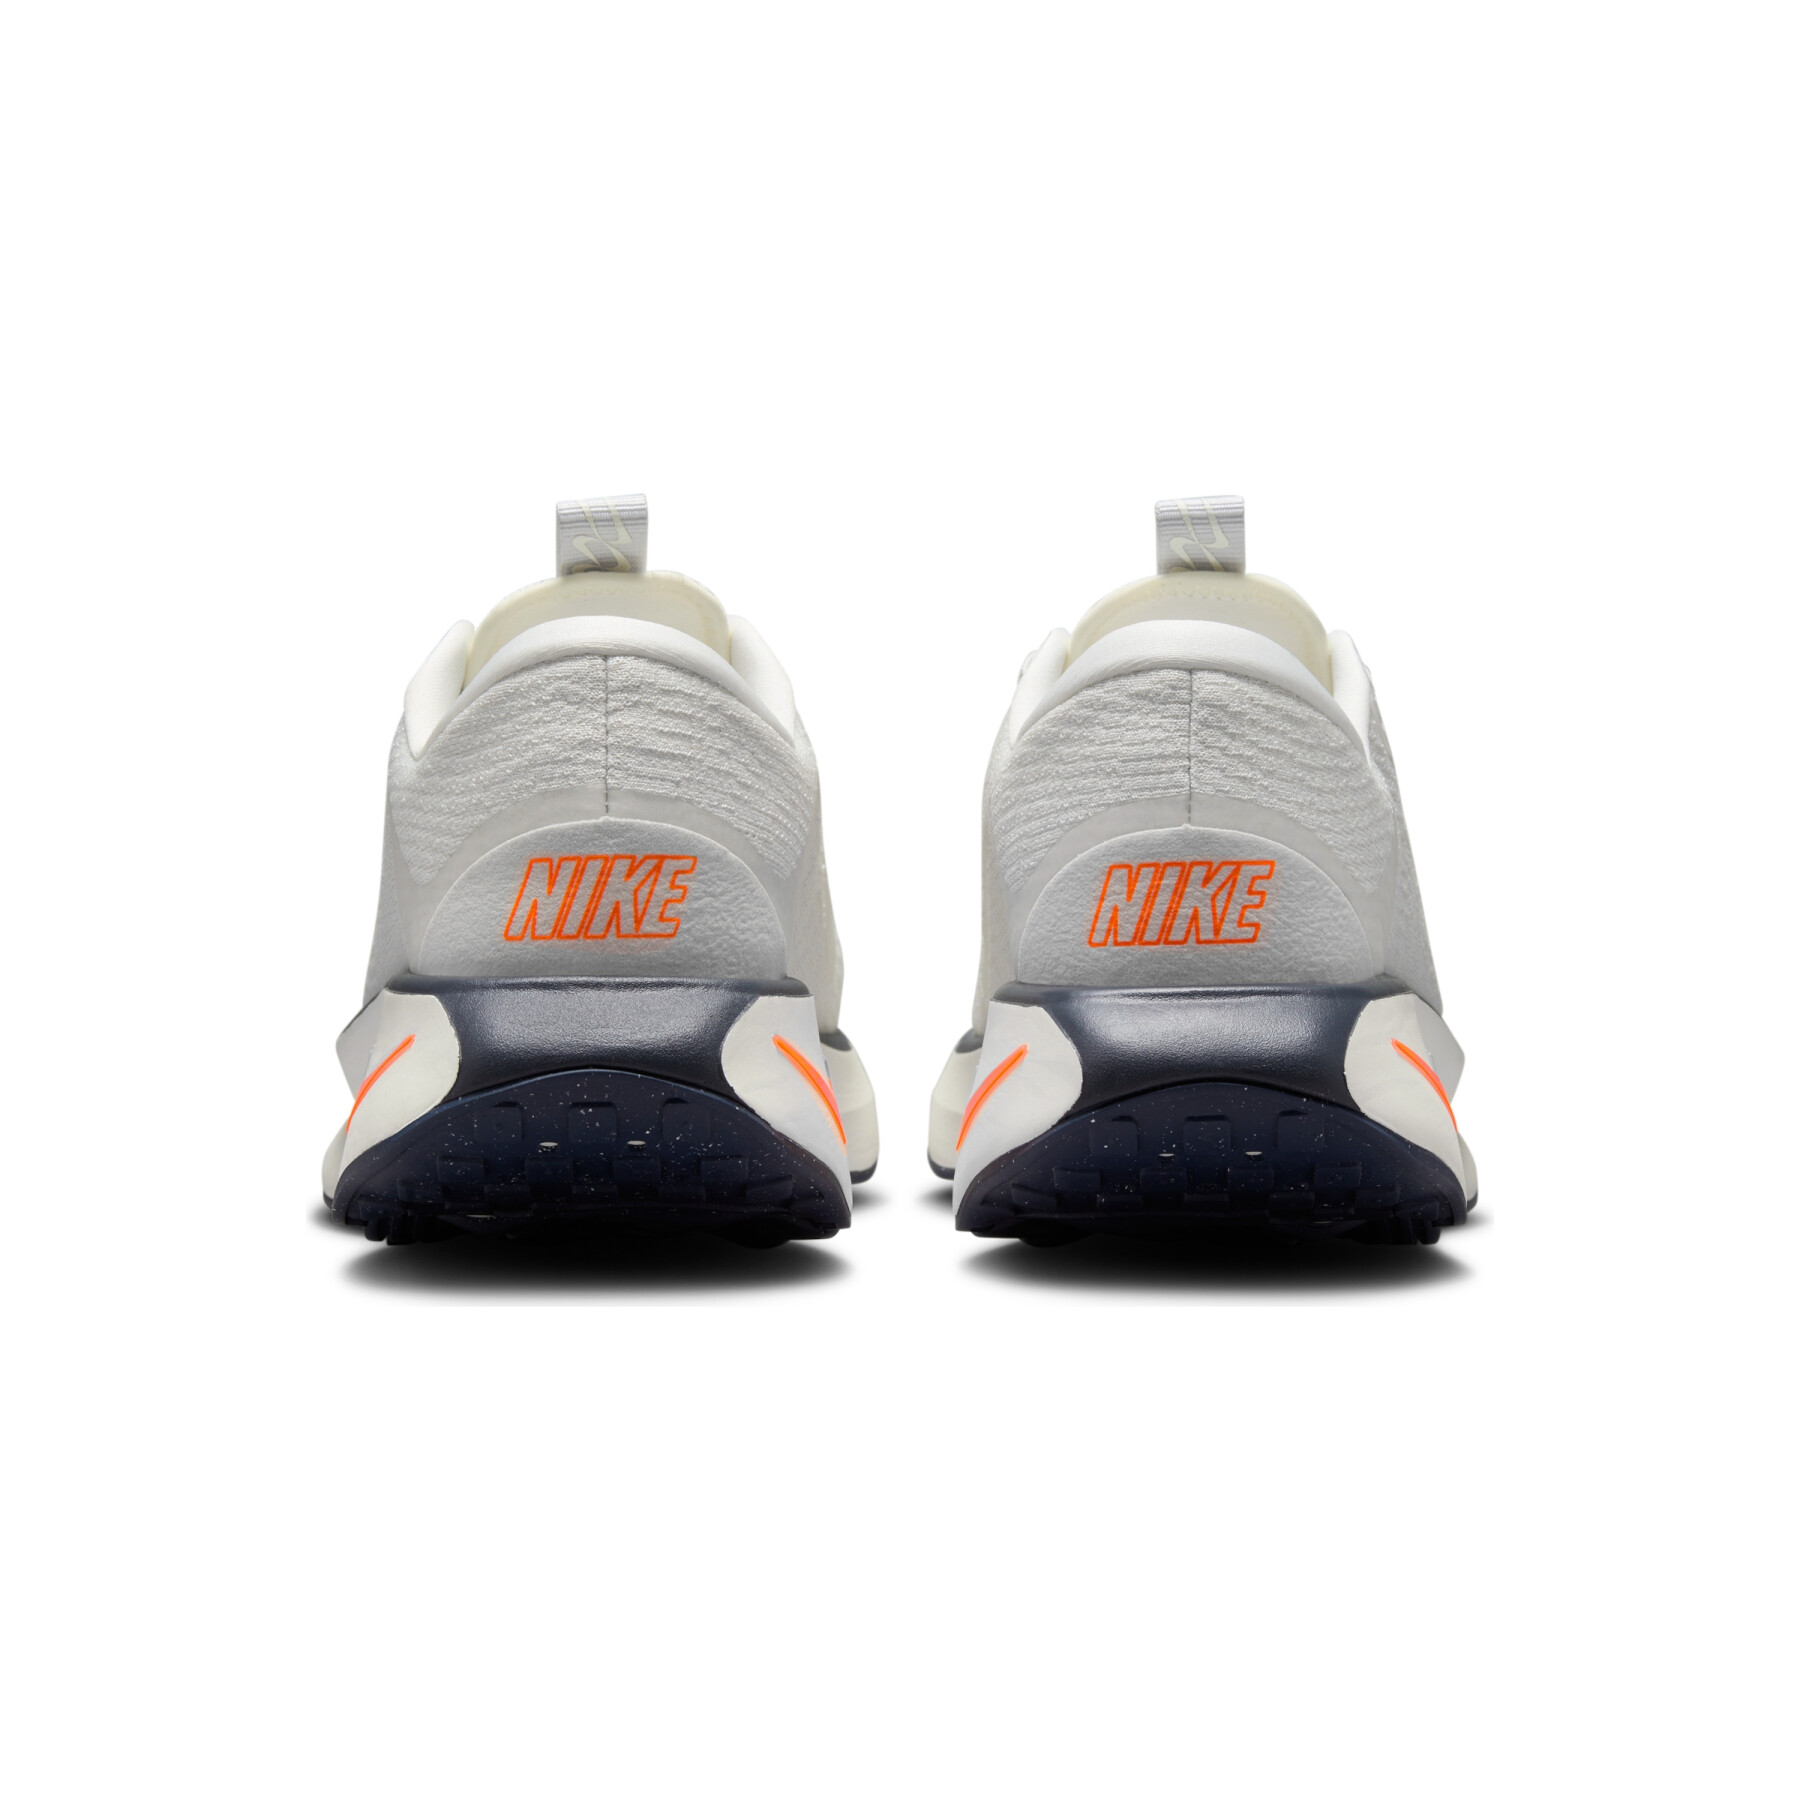 Chaussures de cross training Nike Motiva